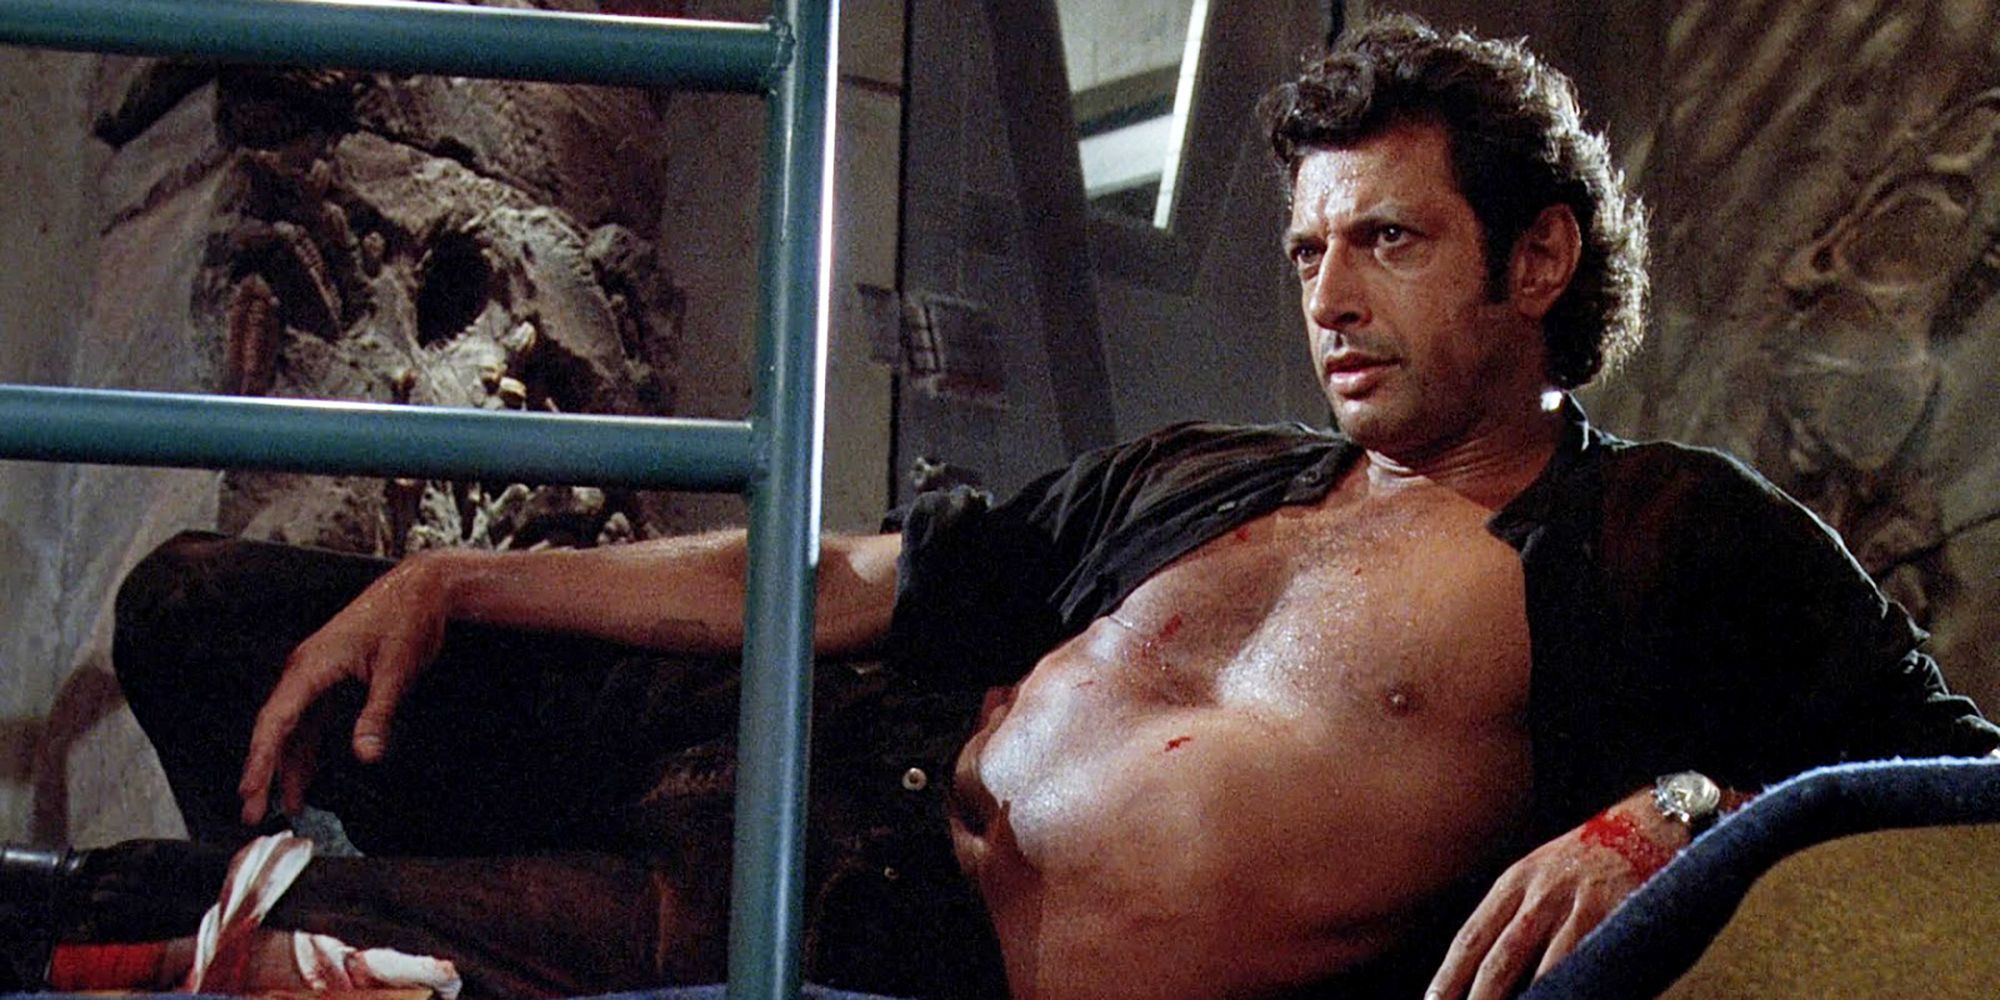 Ian Malcolm lying shirtless in Jurassic Park